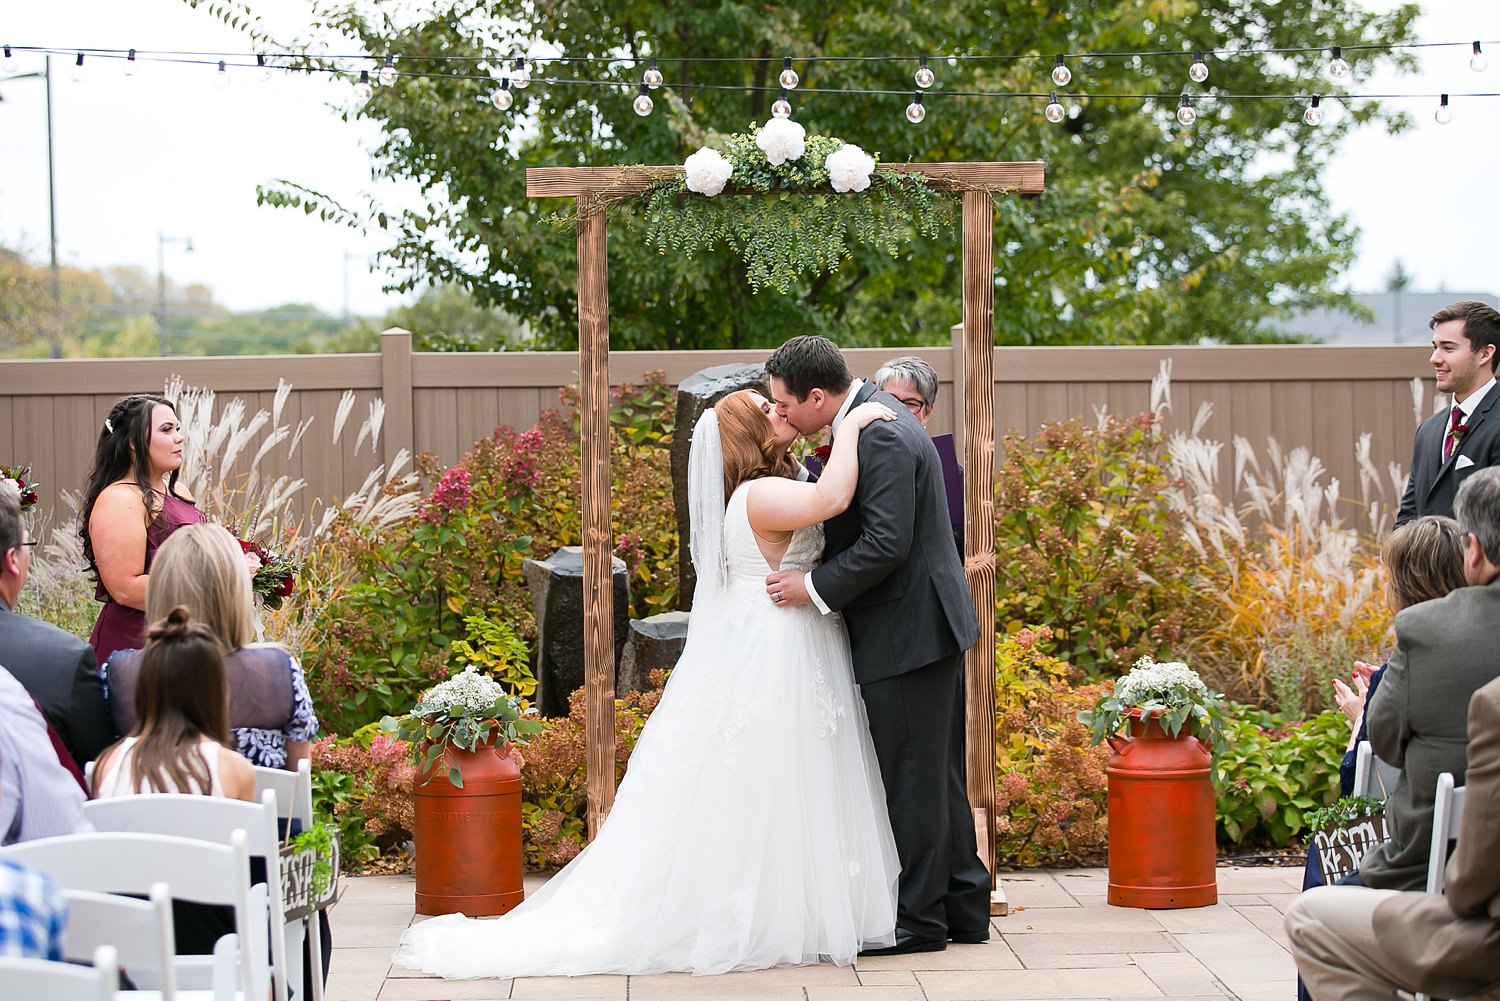 First kiss at Hoosier Grove Barn wedding